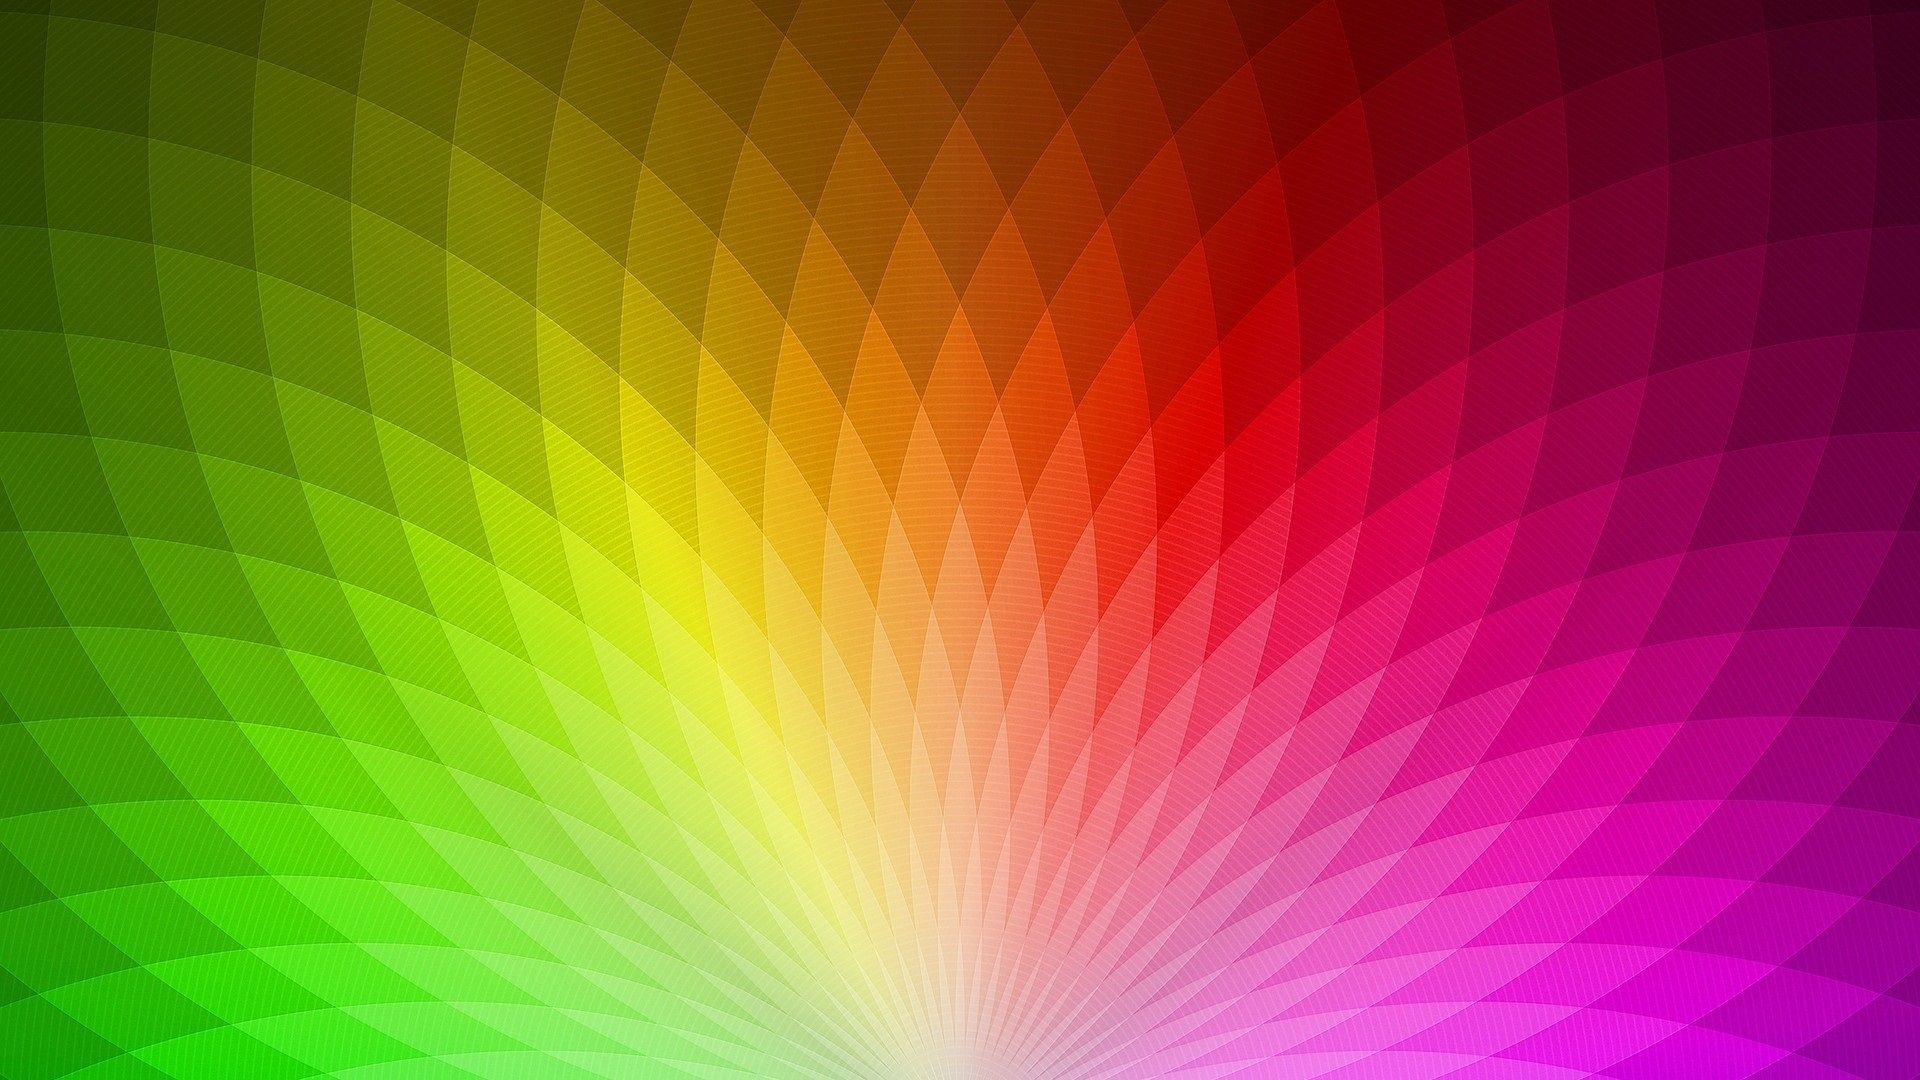 1920x1080 Cute Rainbow Wallpaper For Desktop | Best Wallpaper HD | Rainbow colors art, Rainbow wallpaper, Best wallpaper sites